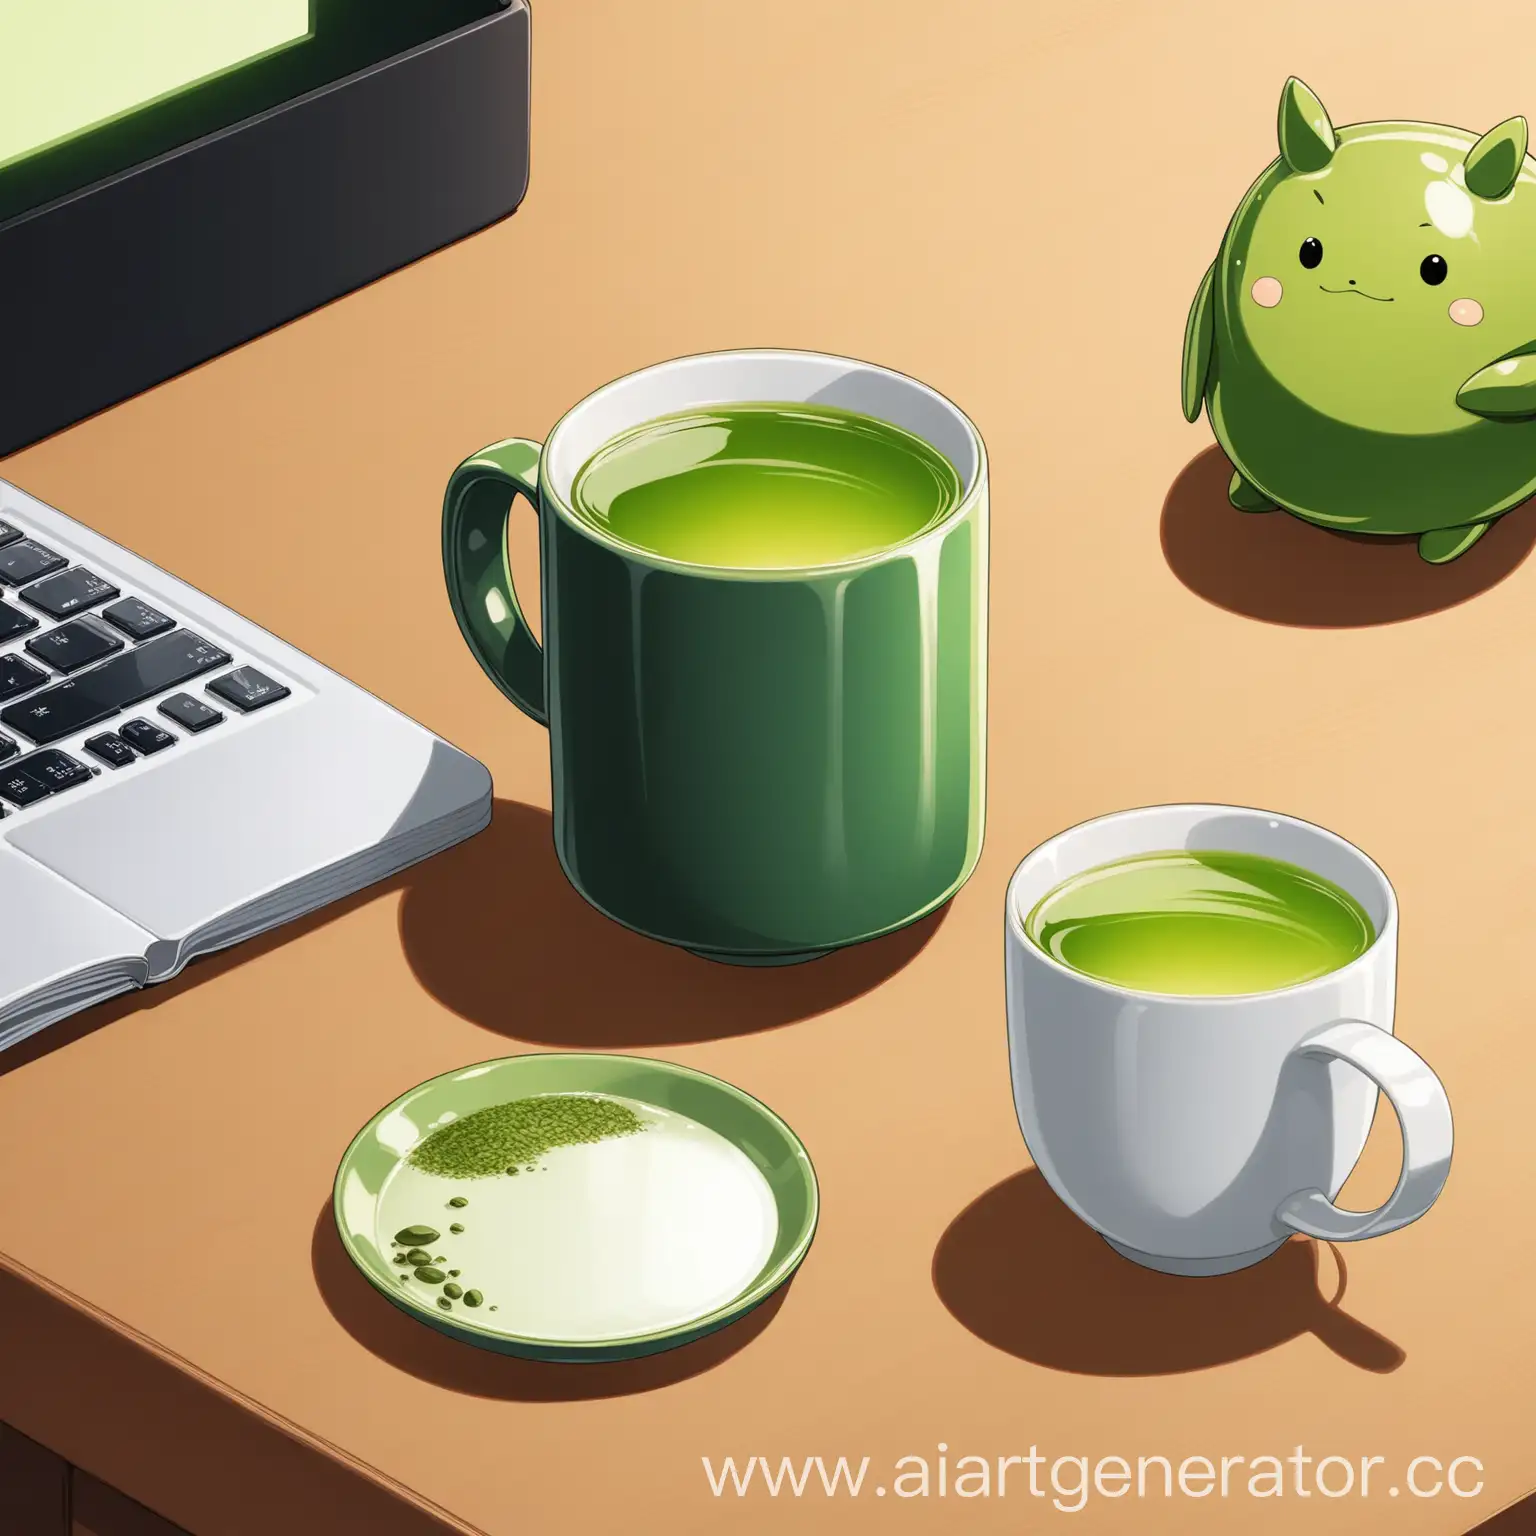 Green-Tea-Mug-with-Tian-Anime-Character-Sitting-Next-To-It